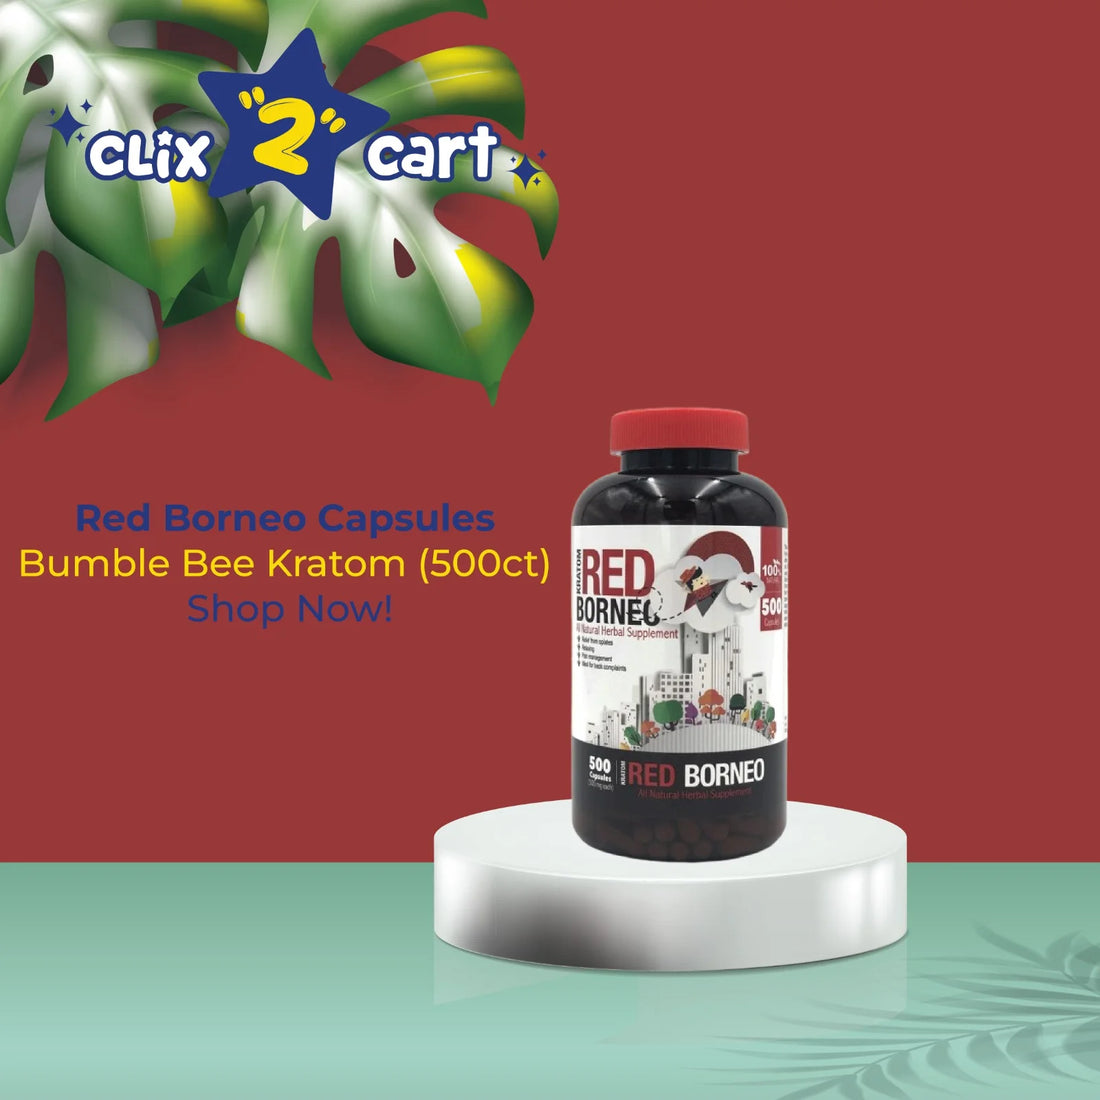 Red Borneo Capsules: Bumble Bee Kratom (500ct) – Shop Now!